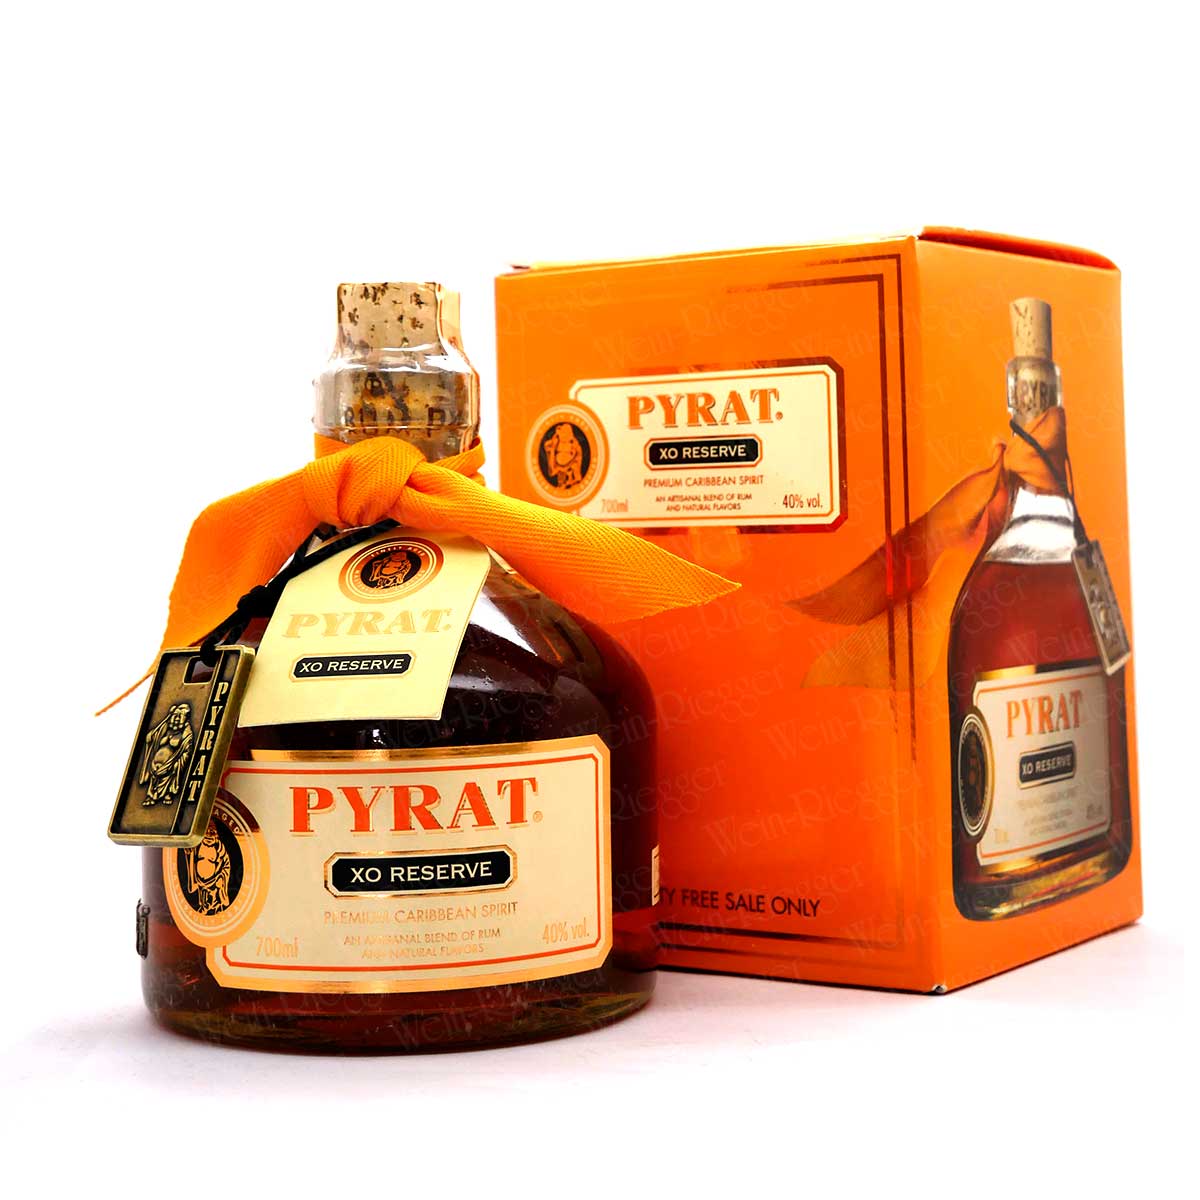 Pyrat XO Reserve | Spirituose auf Rum-Basis